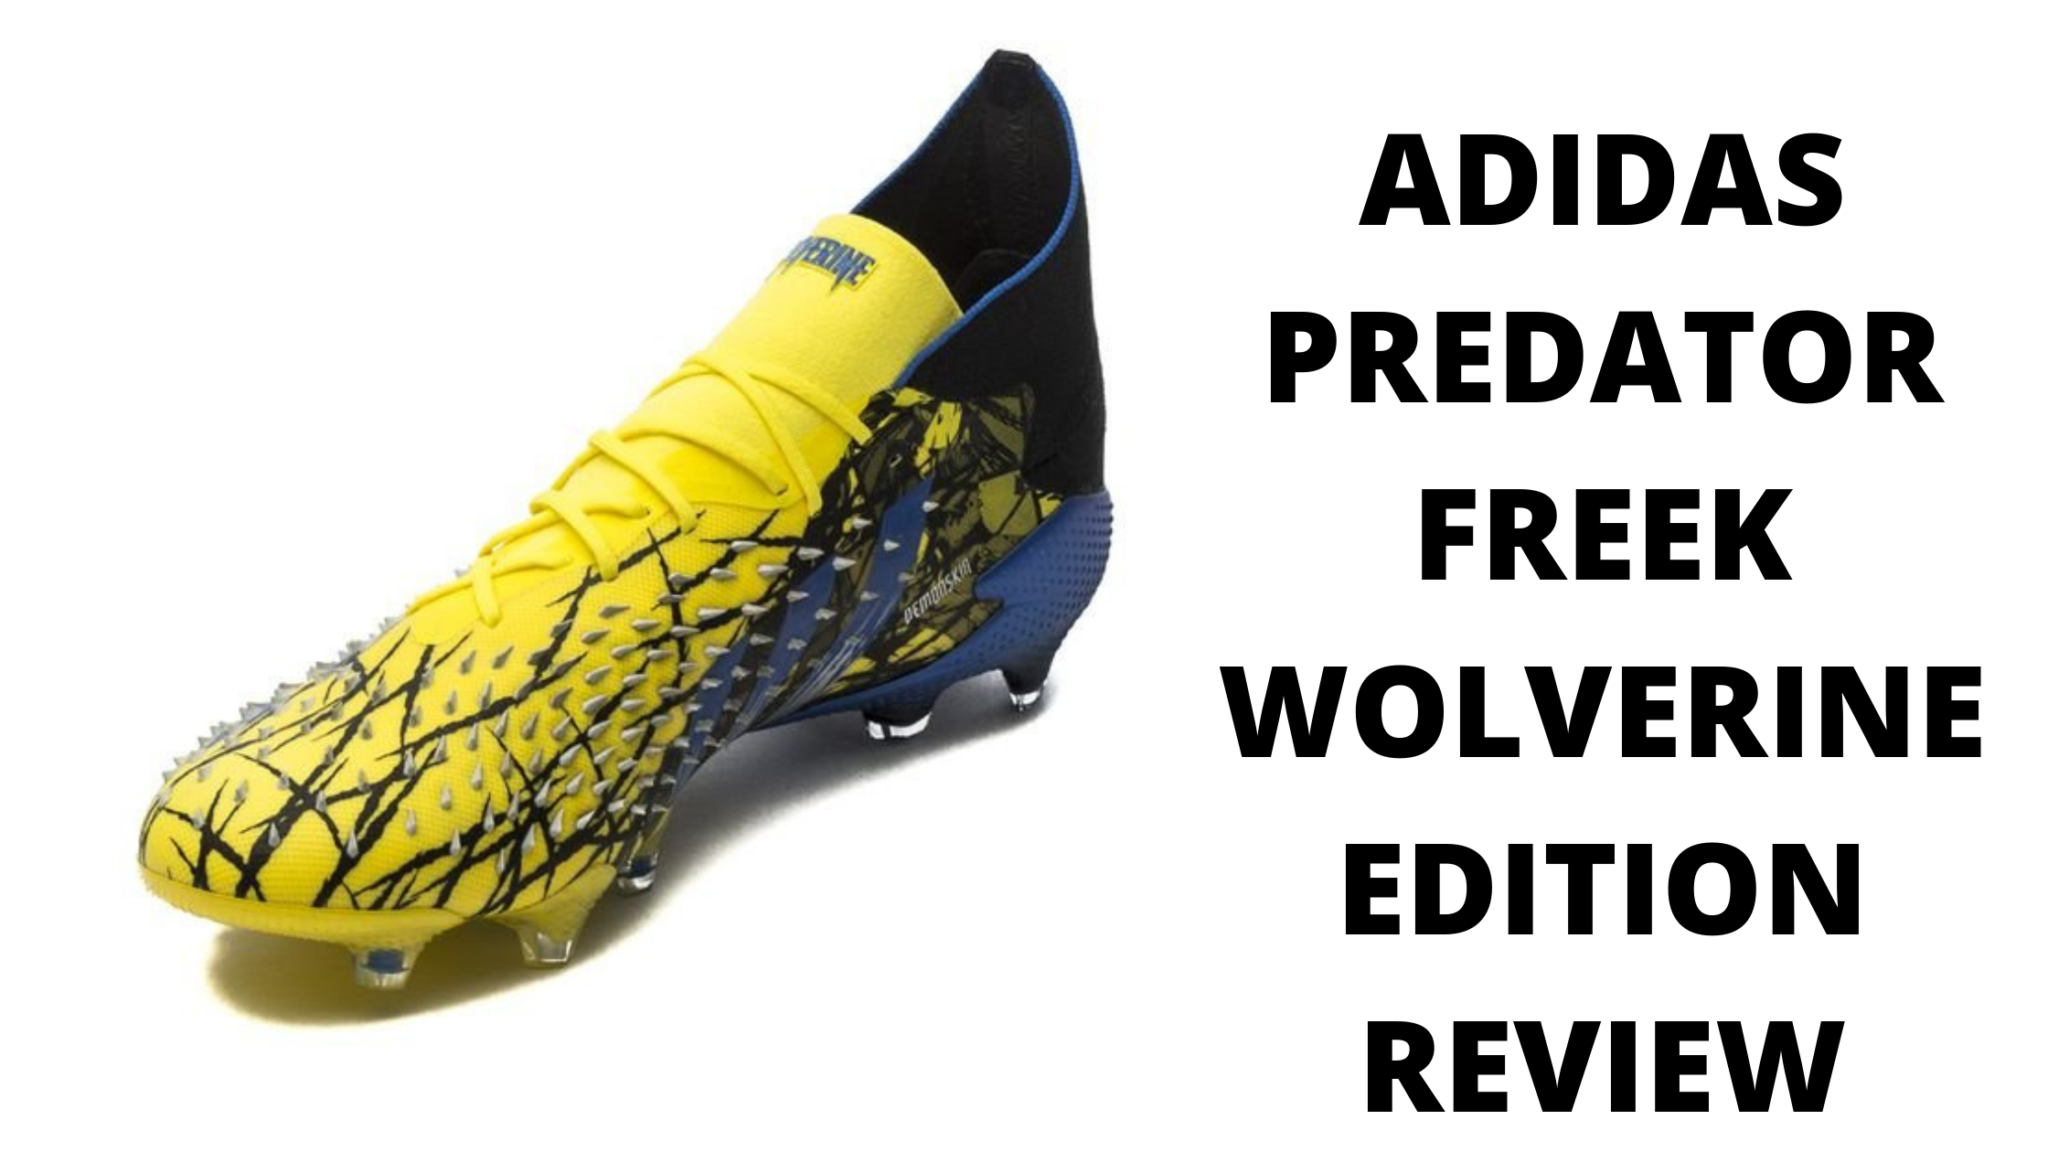 Asidas predator freek wolverine themed edition